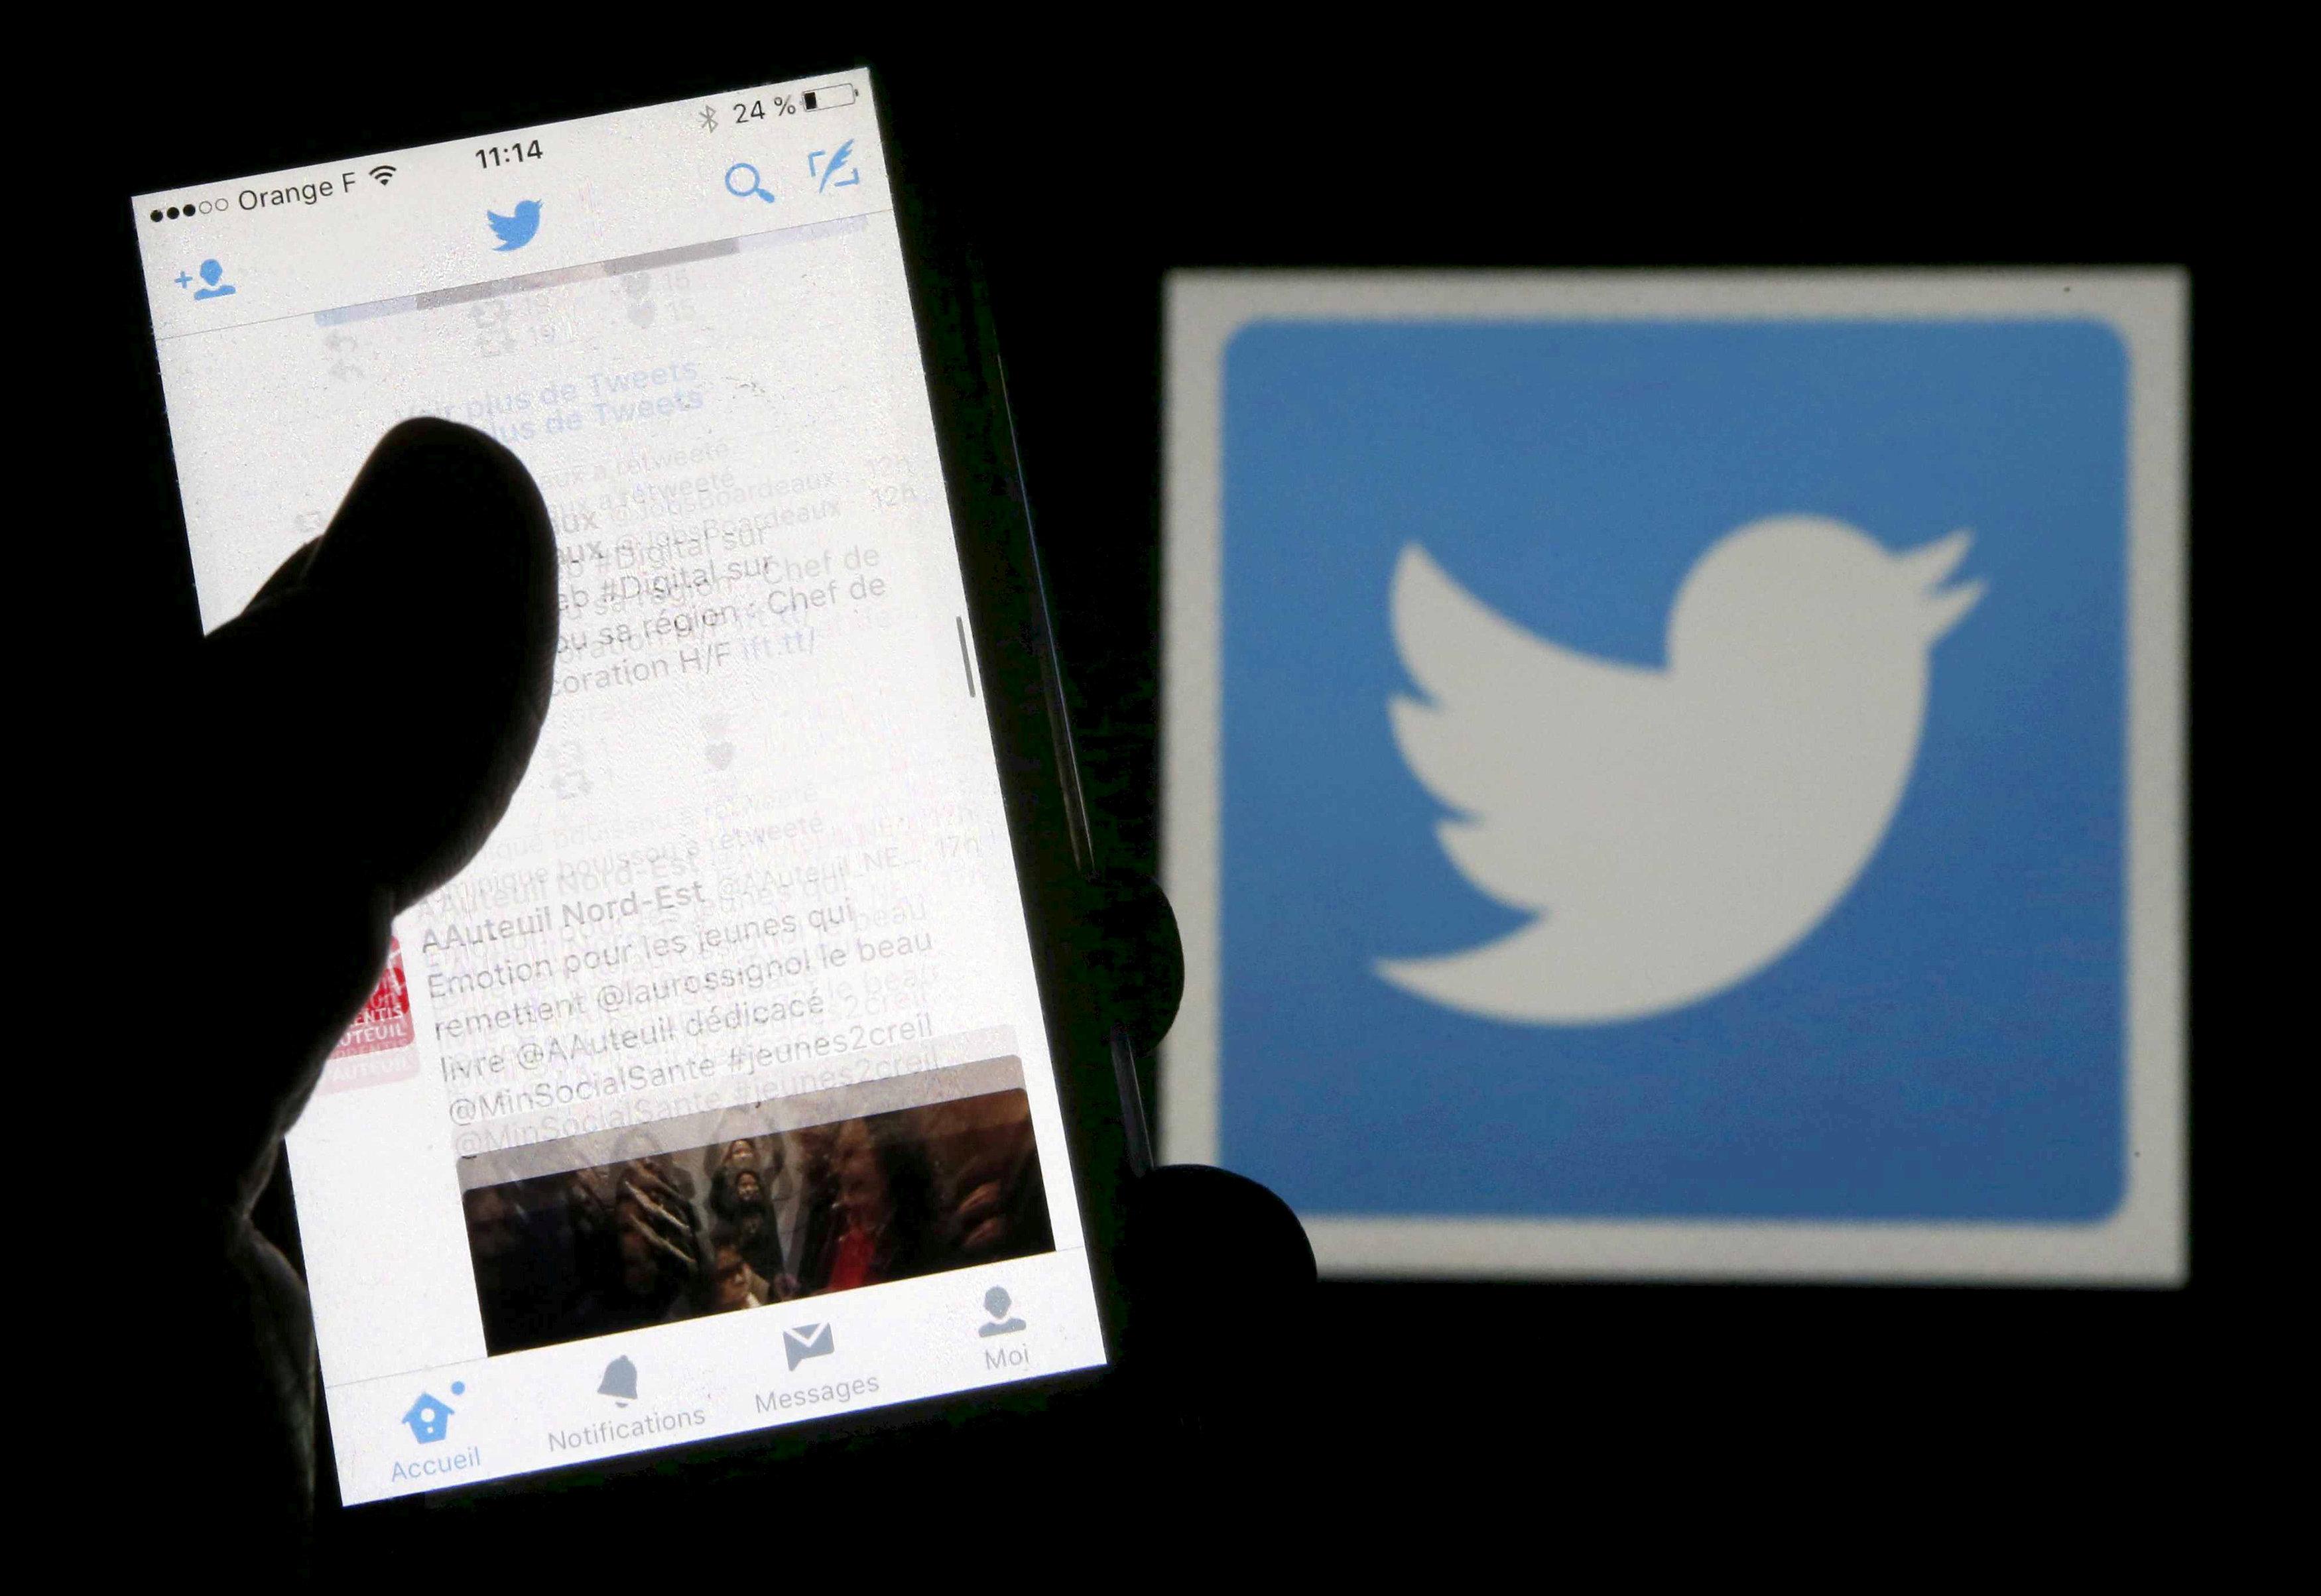 Twitter menguji perombakan proses untuk menandai tweet berbahaya GMA News Online